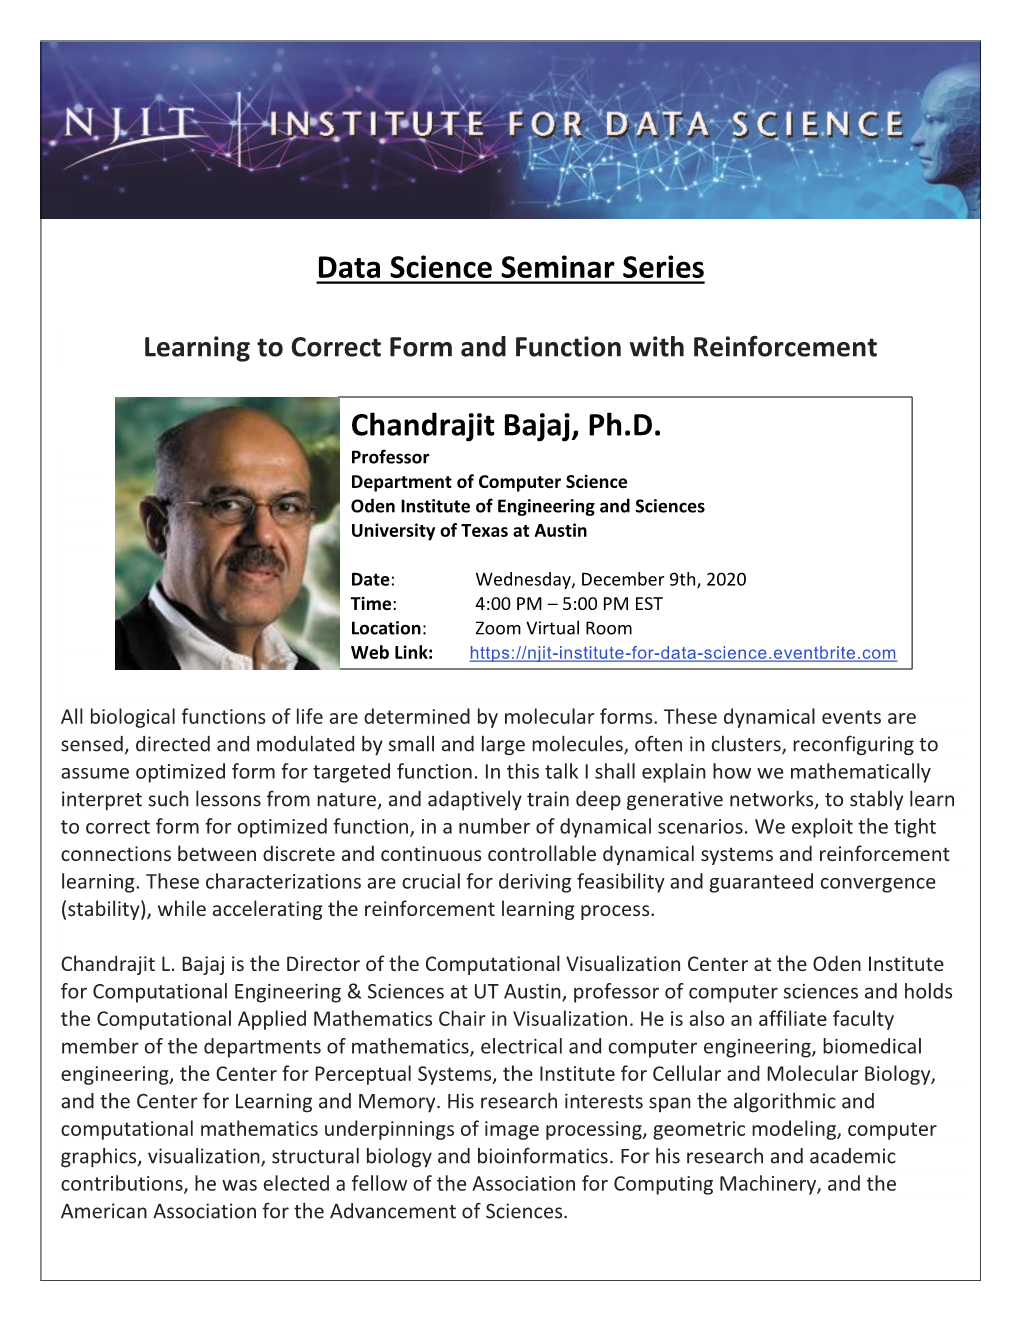 Data Science Seminar Series Chandrajit Bajaj, Ph.D